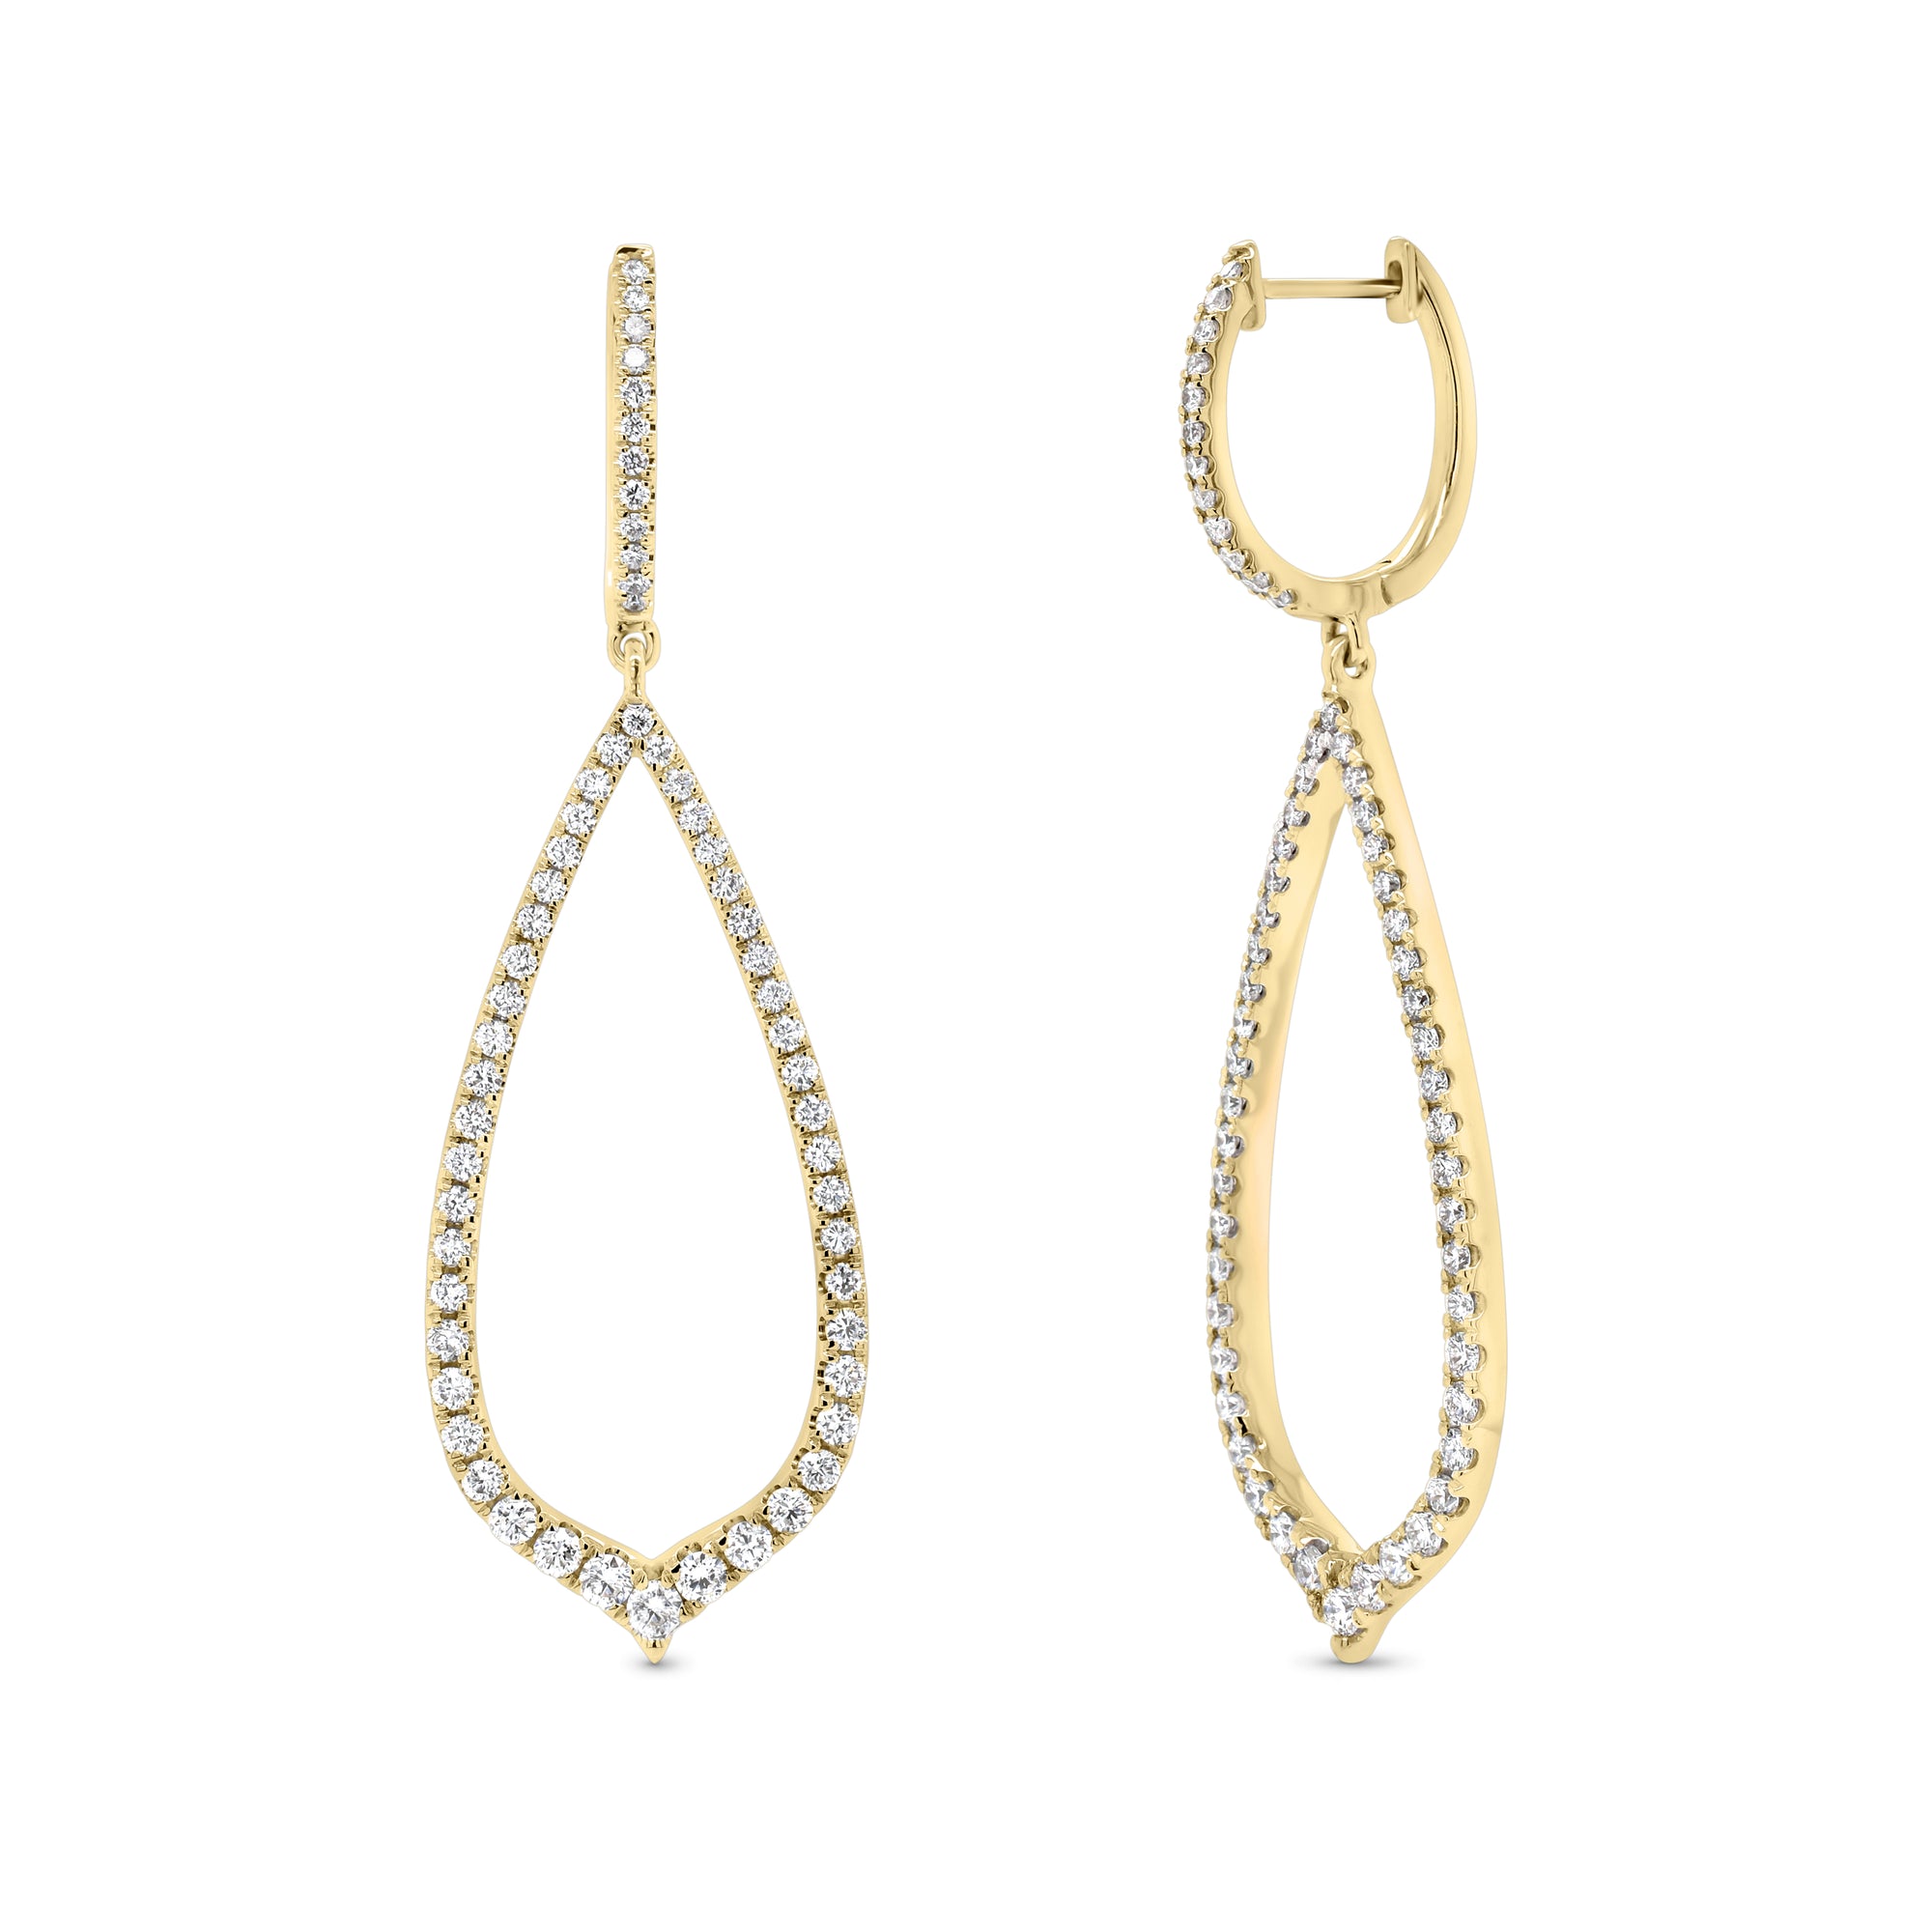 Diamond Arabesque Drop Earrings  - 18K gold weighing 6.58 grams  - 116 round diamonds totaling 1.22 carats